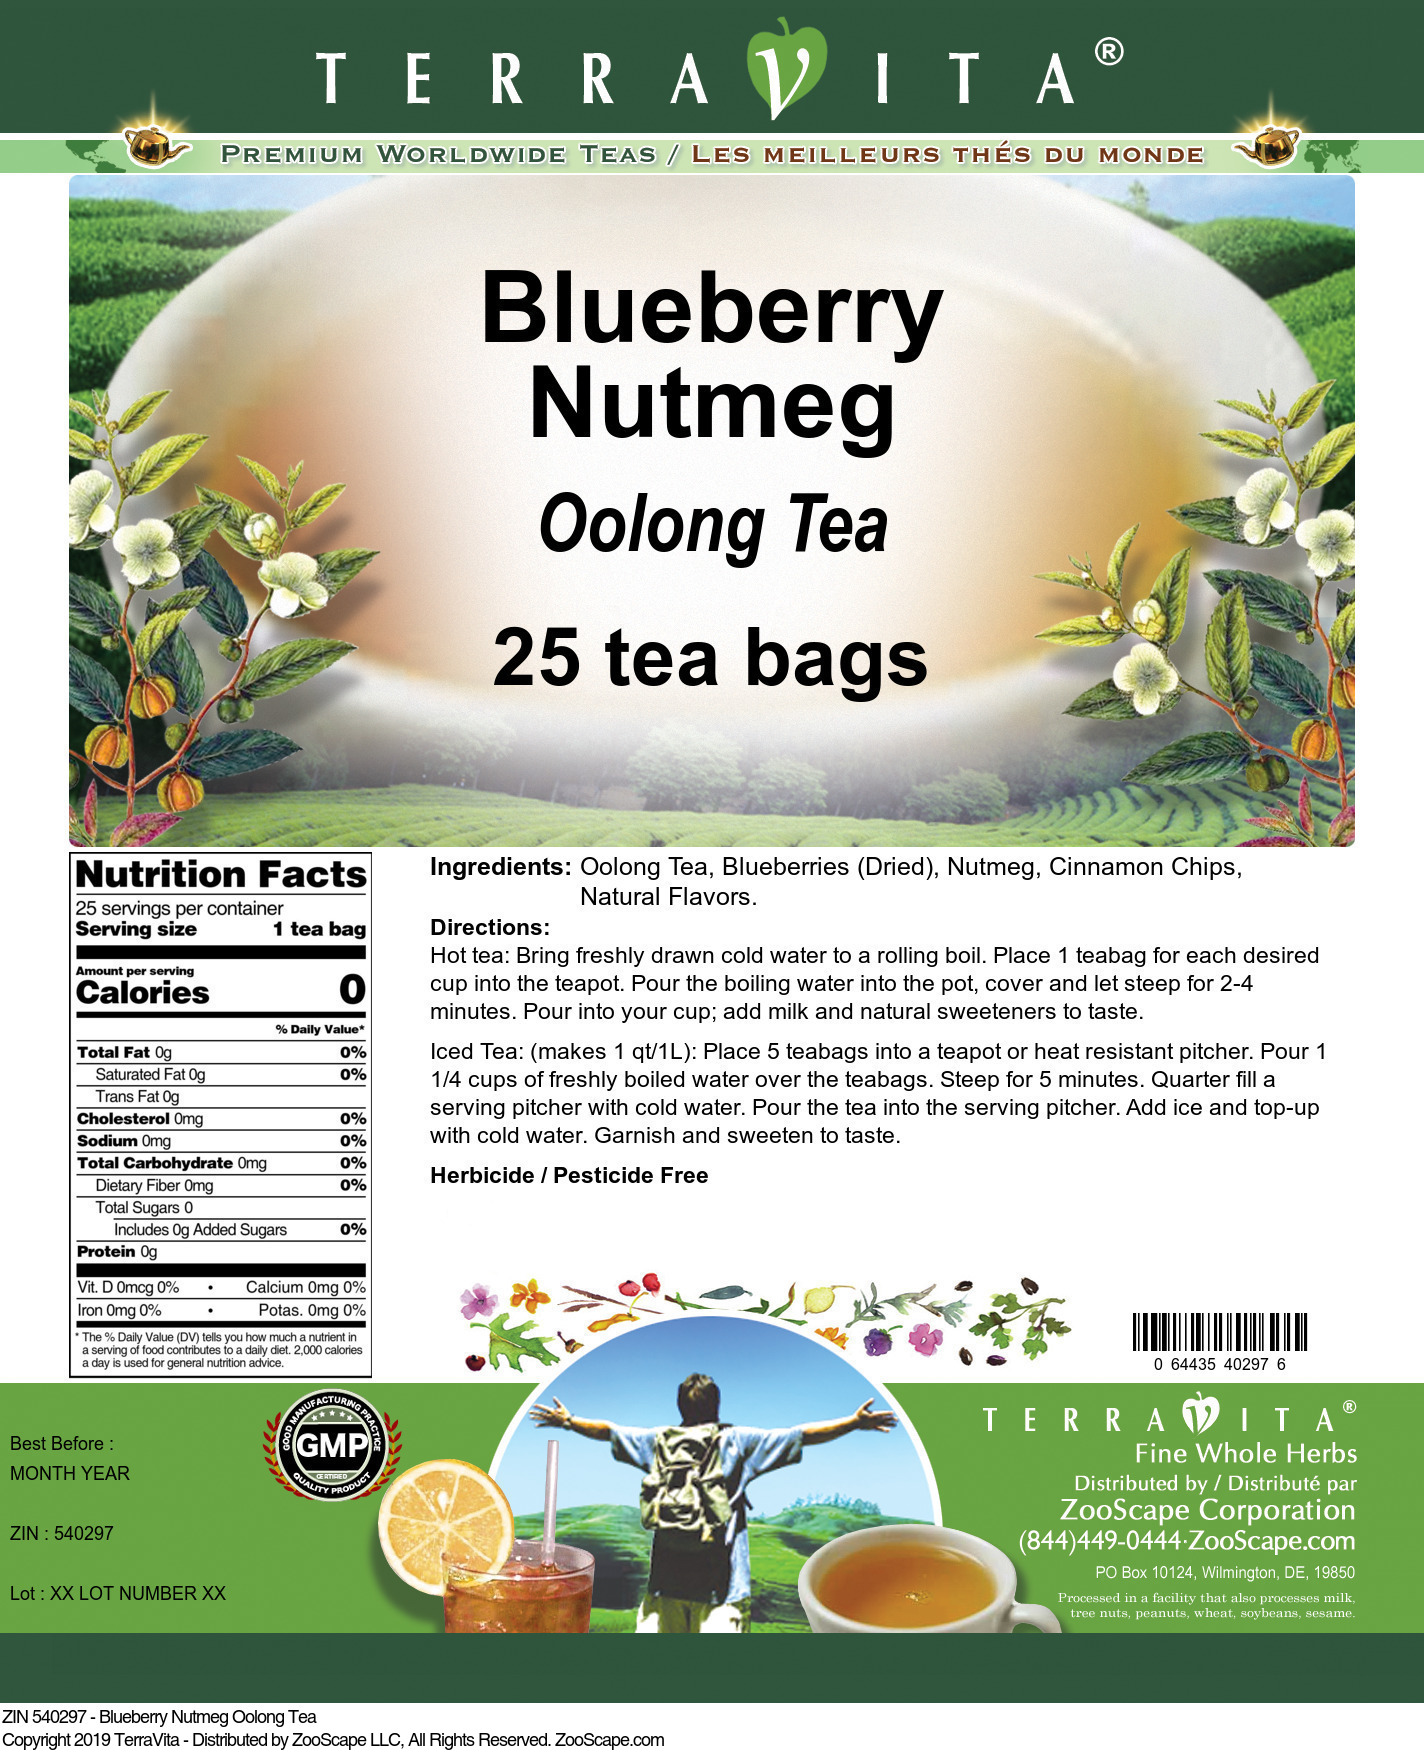 Blueberry Nutmeg Oolong Tea - Label